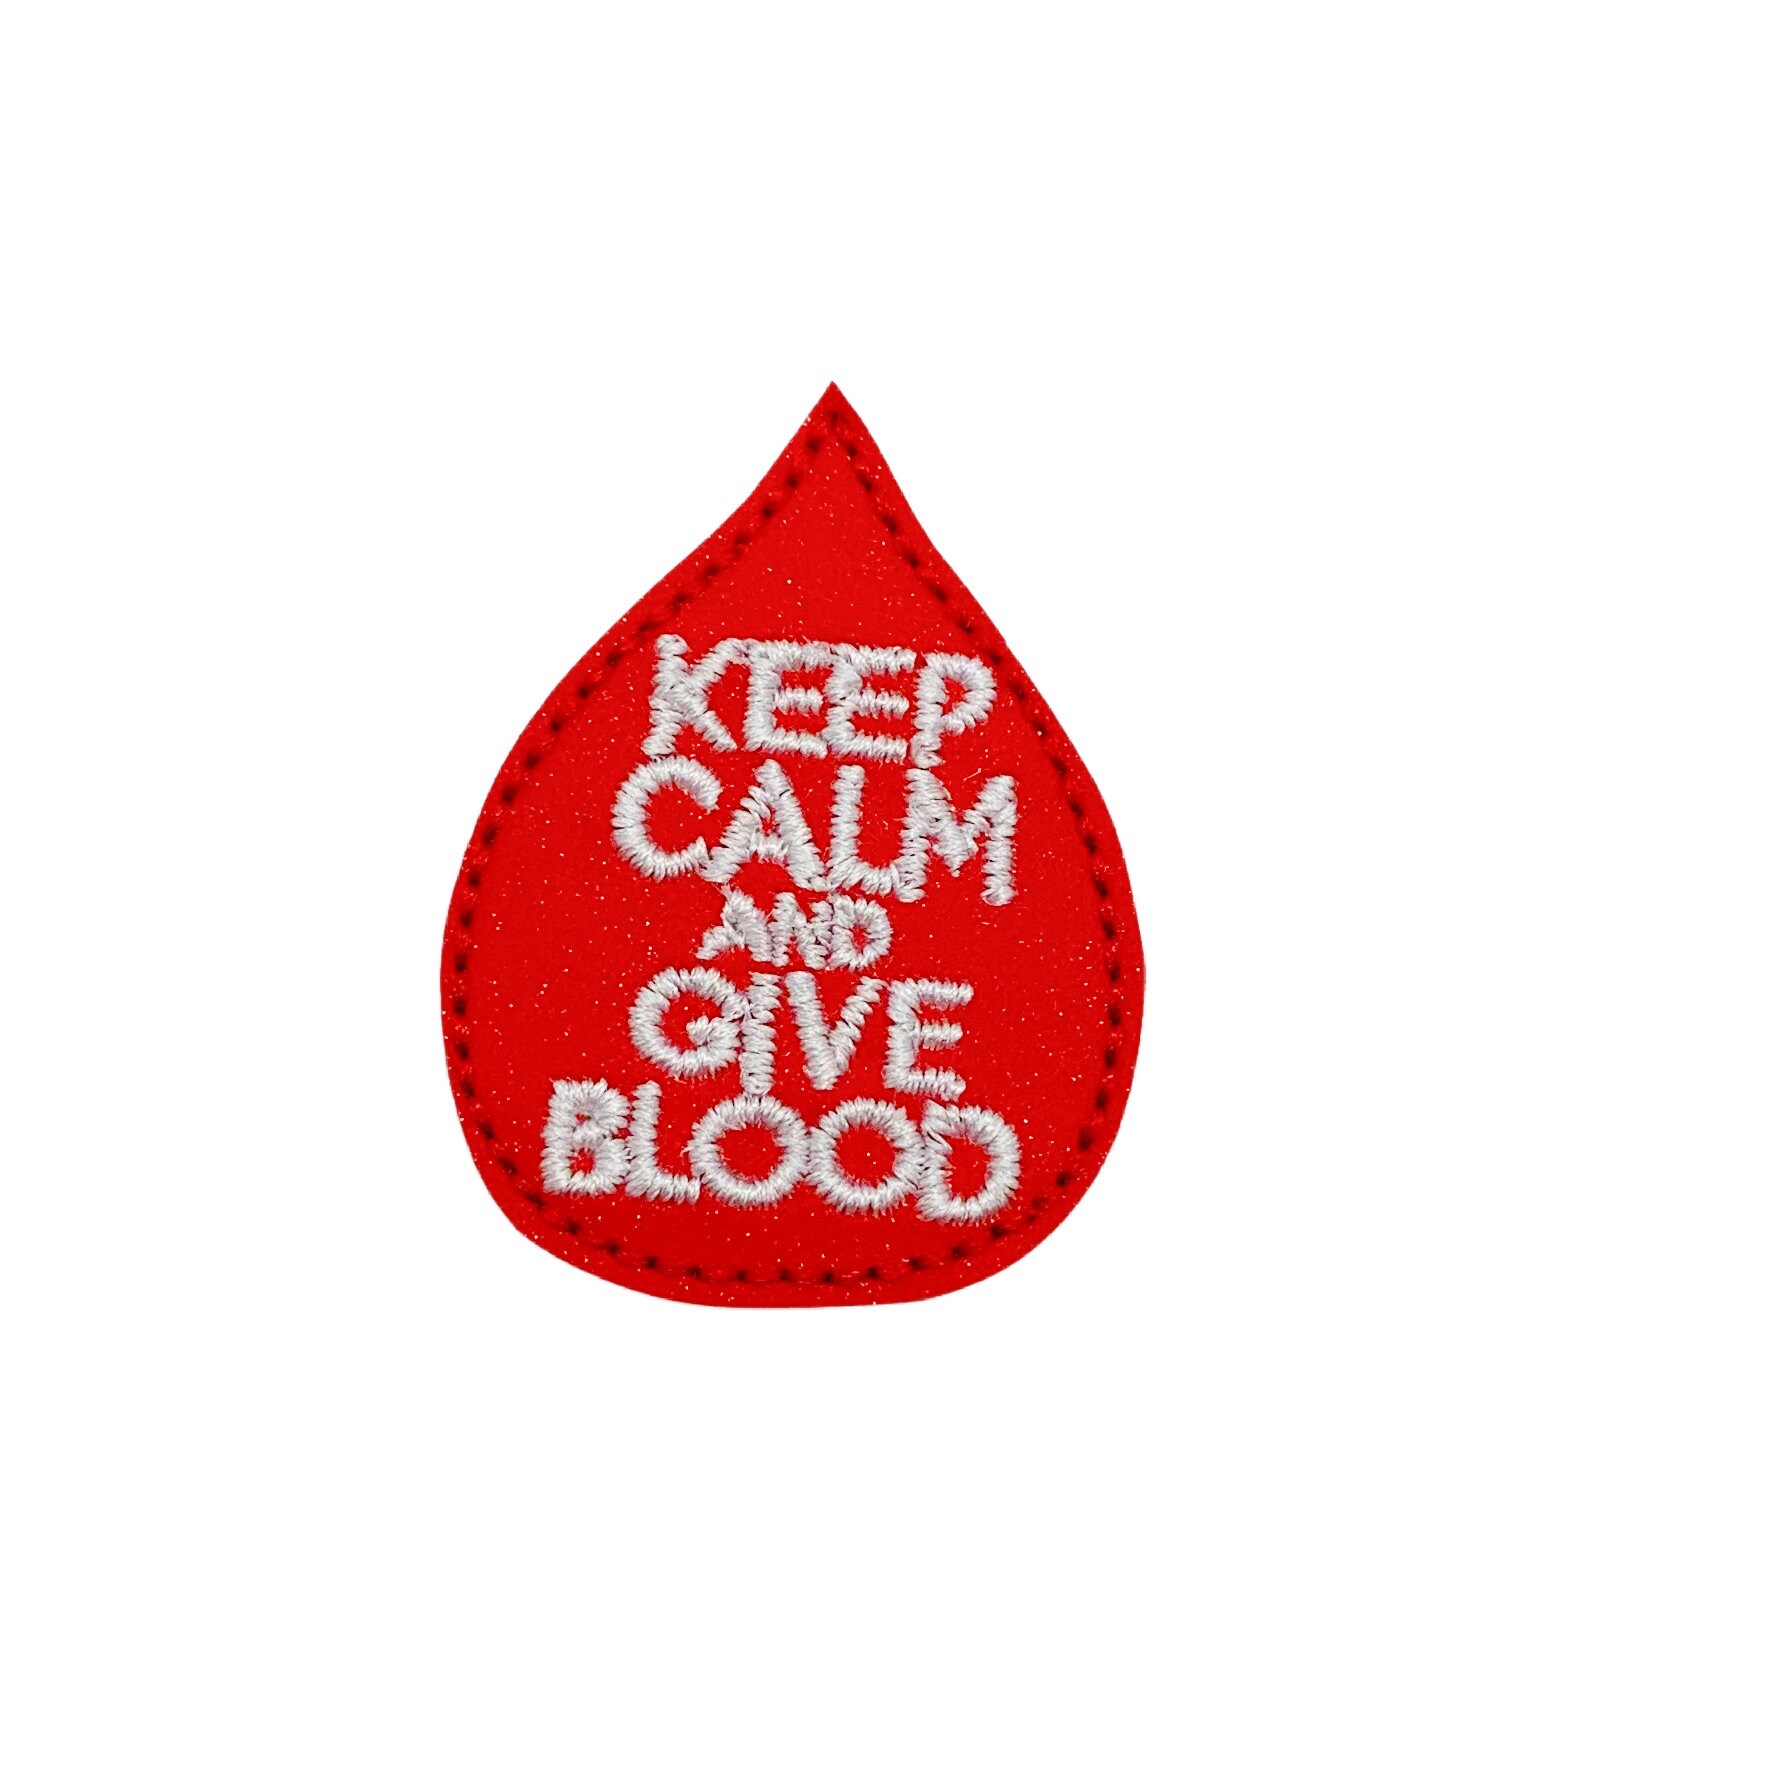 BLOOD DROP Felt badge Reel, Felt badge Patch, Red blood badge reel, Nurse  badge Reel